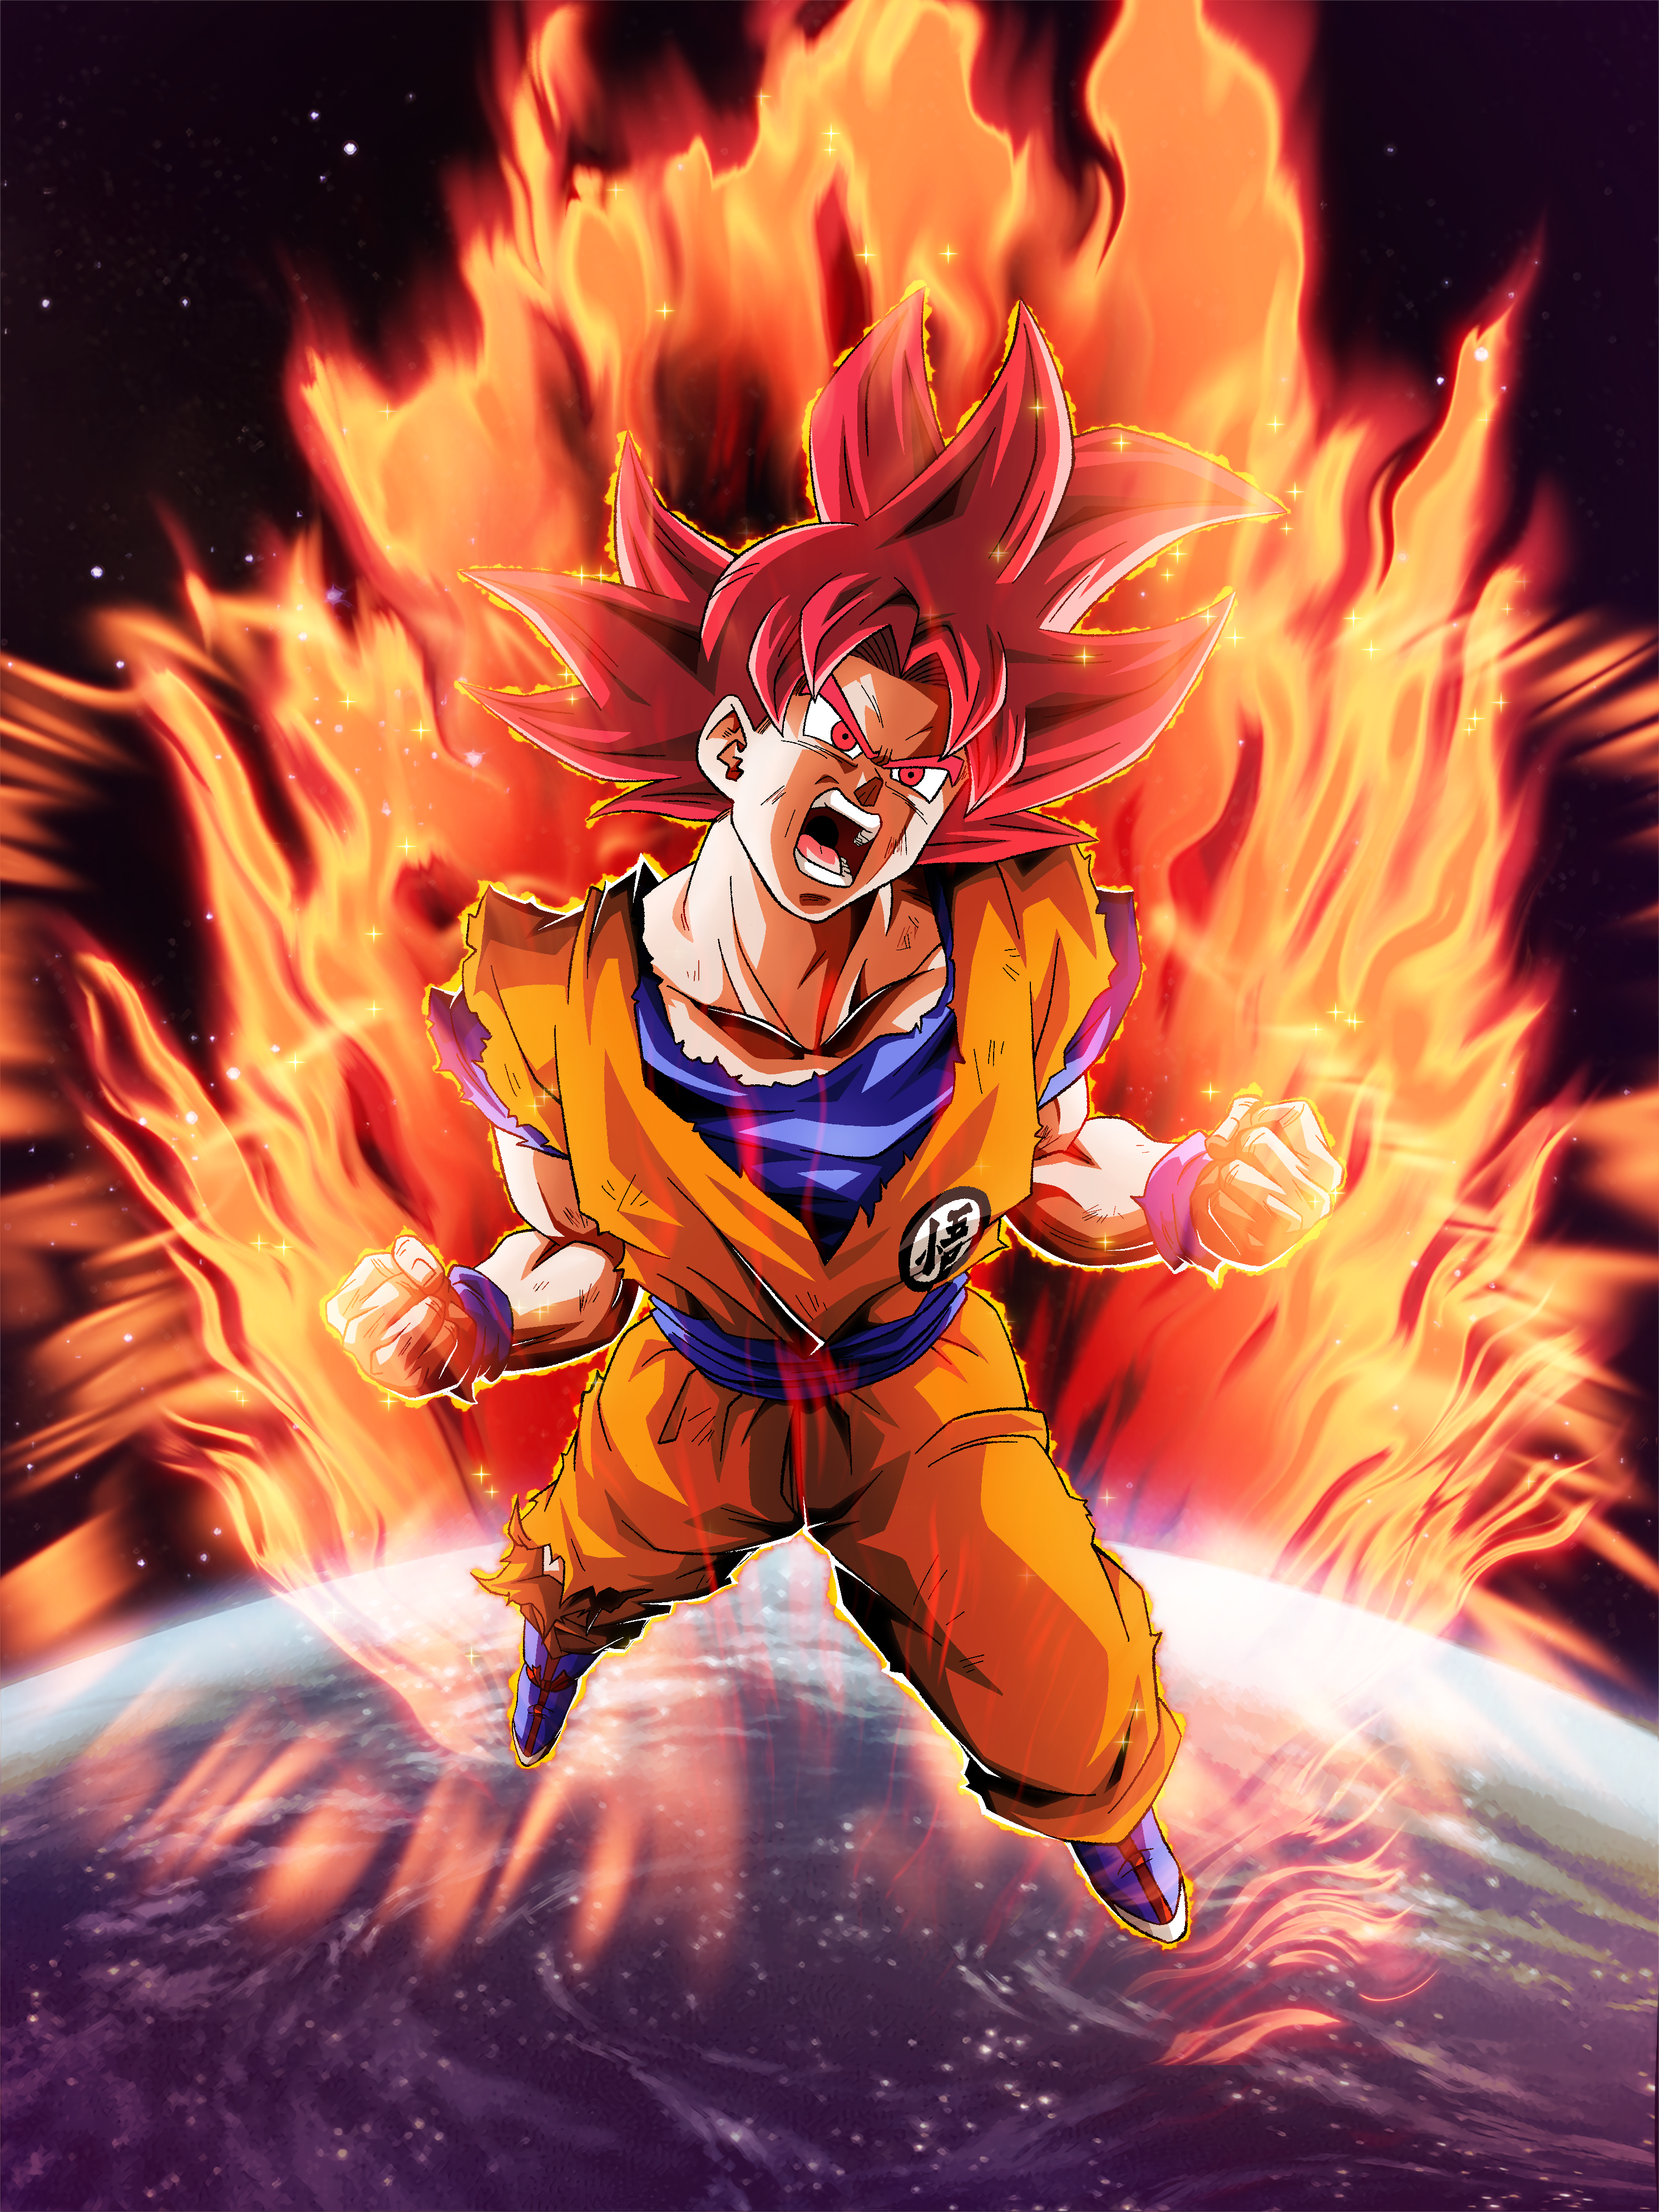 Goku The Super Saiyan God